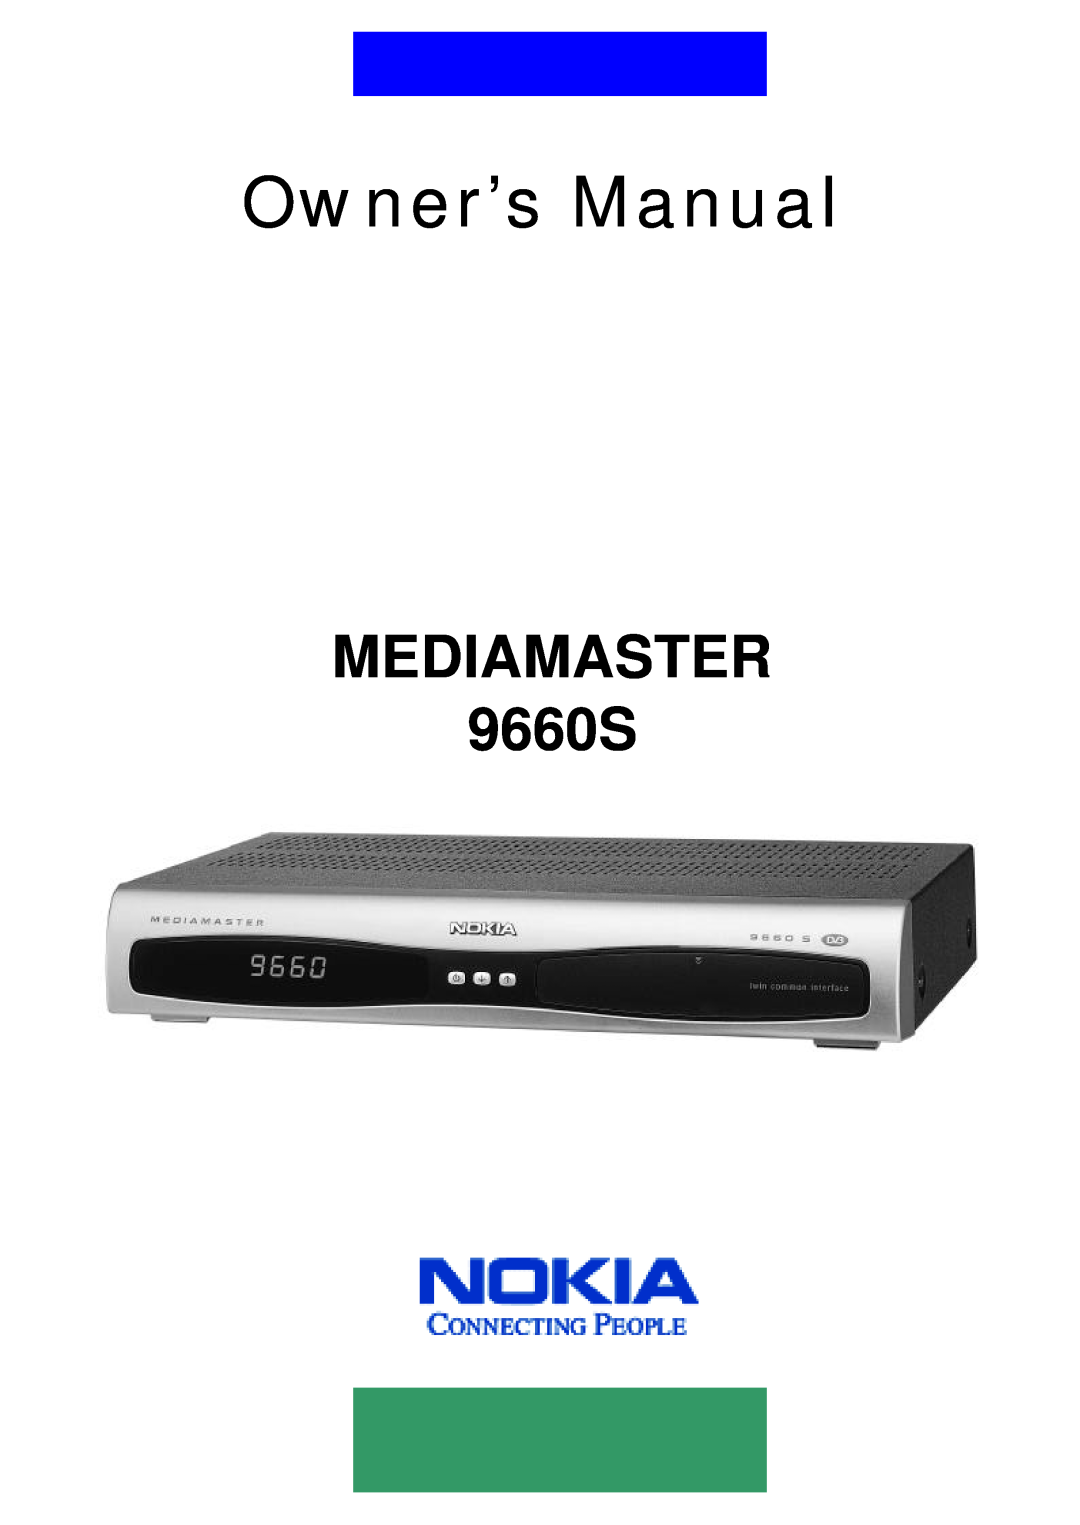 Nokia owner manual Owner’s Manual, MEDIAMASTER 9660S 